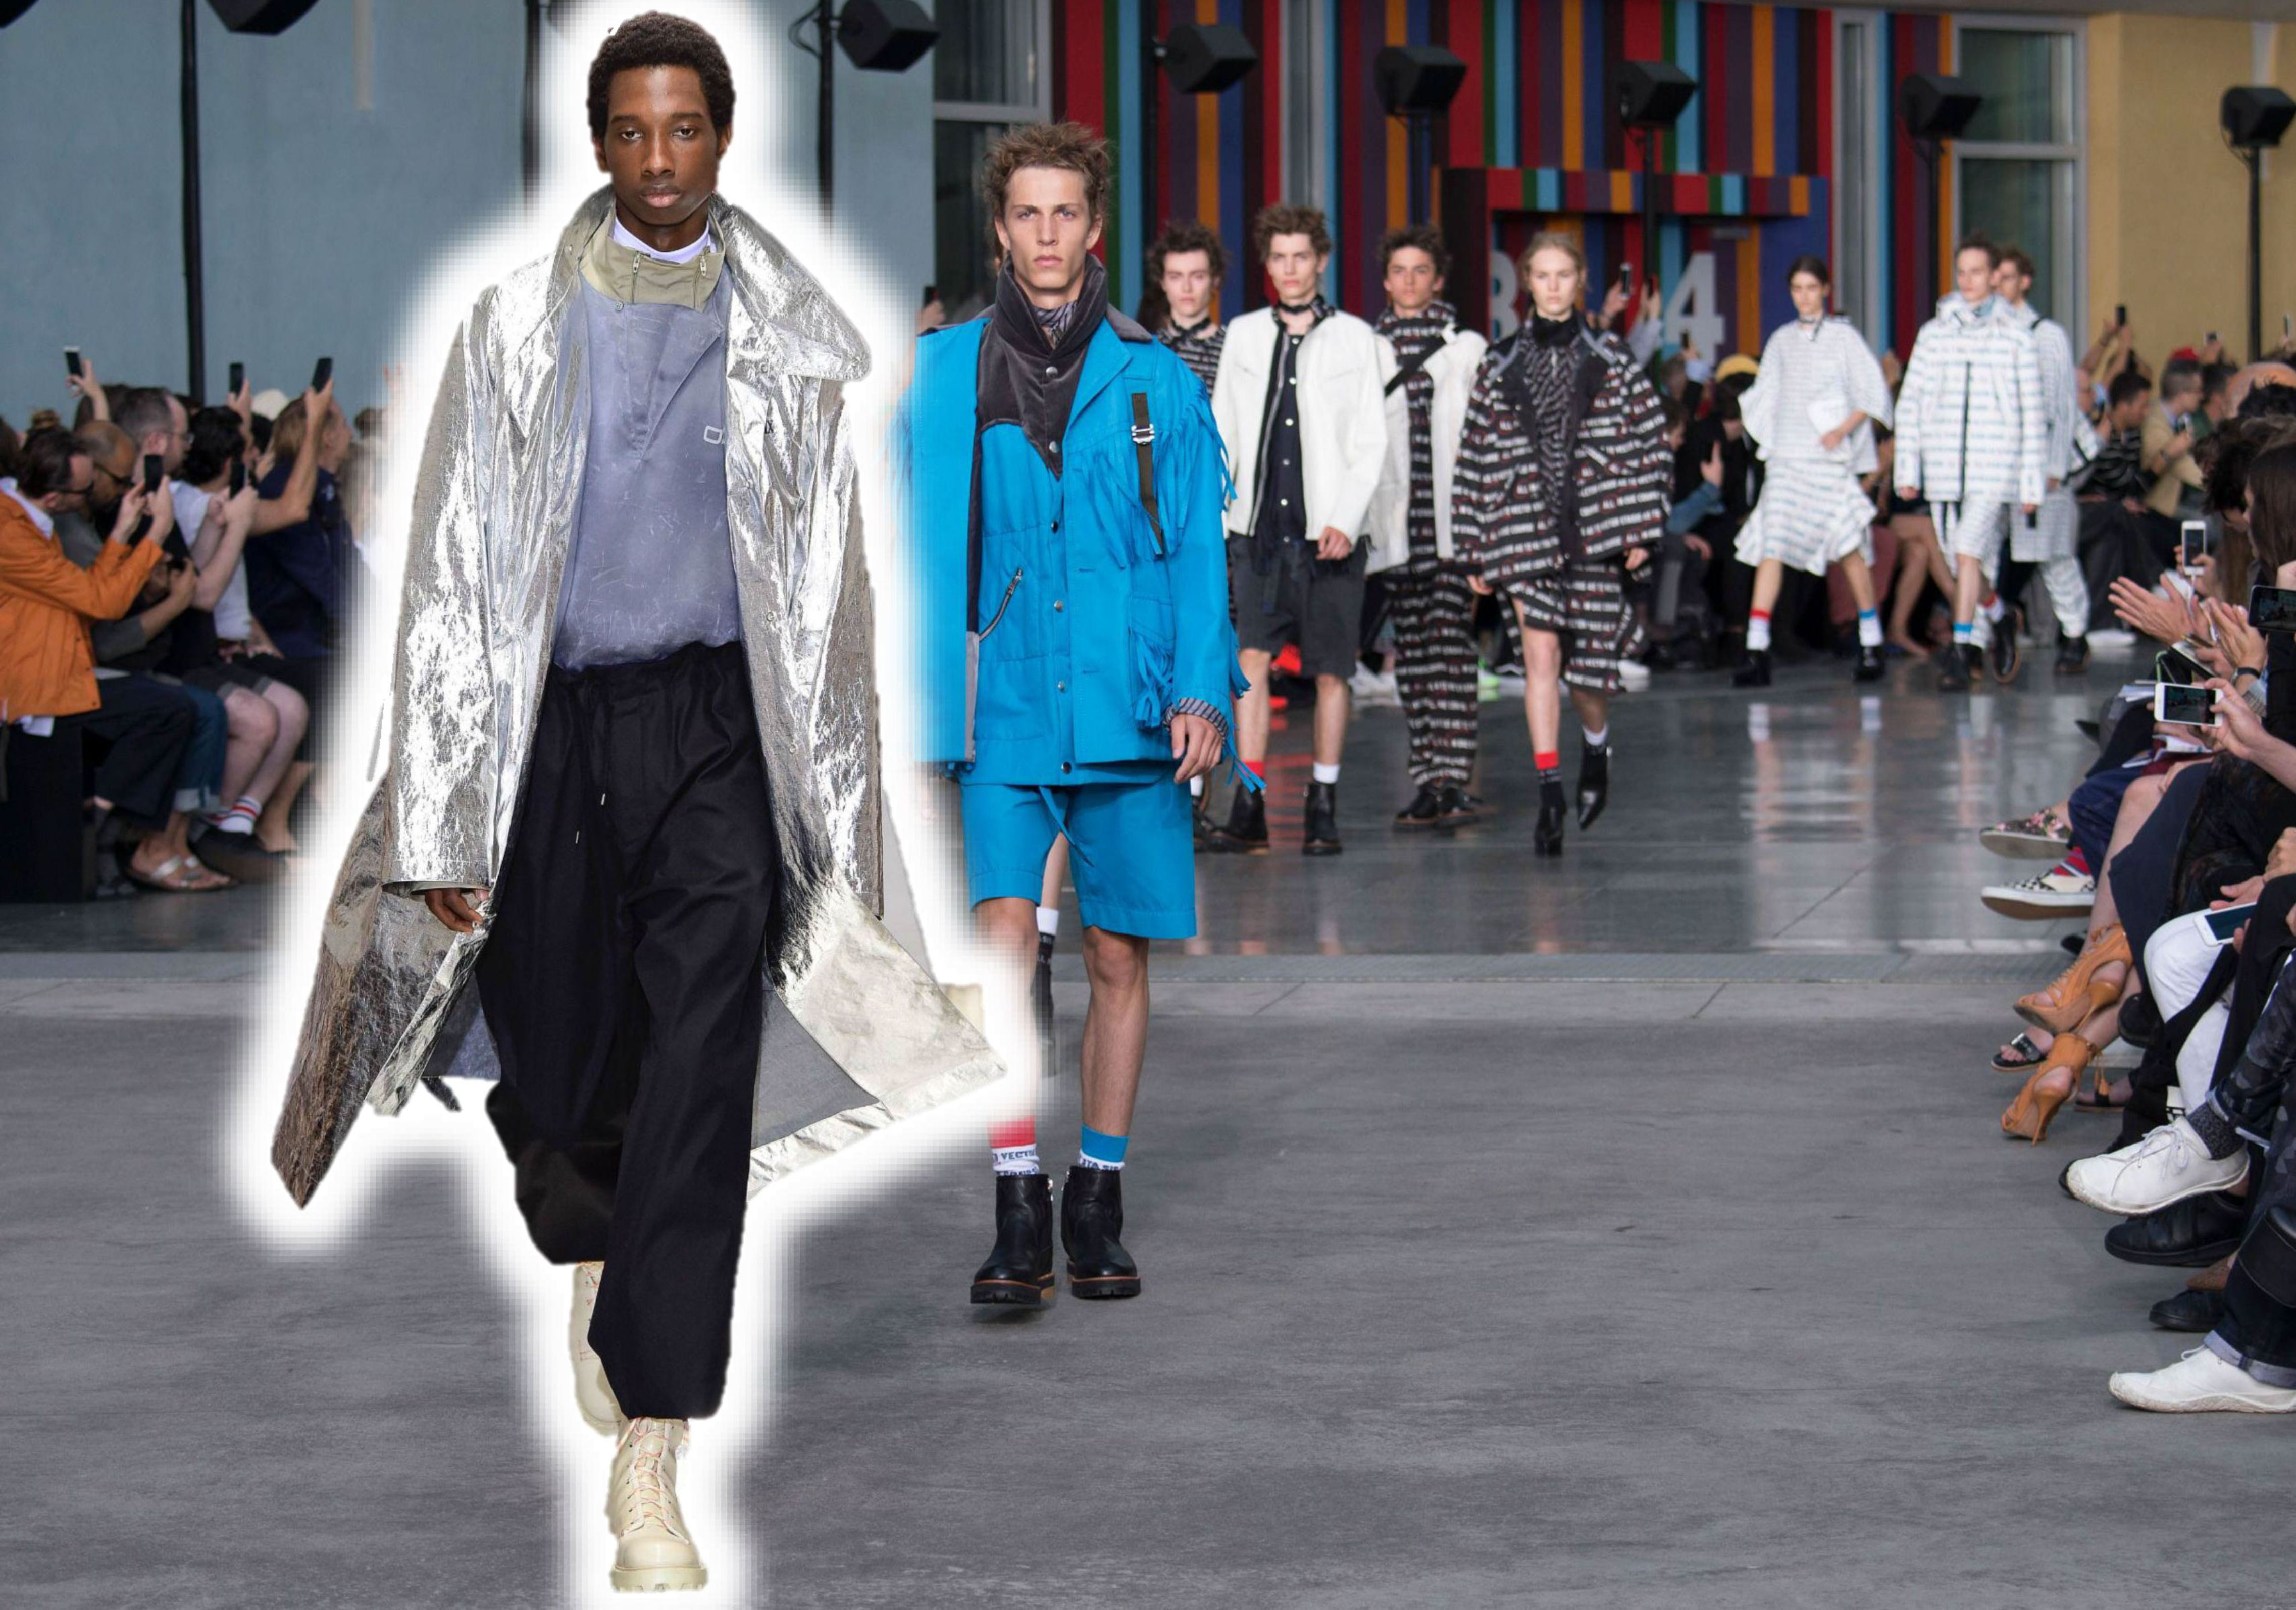 2019 S/S Men's Streetwear on Catwalks -- Funky Materials